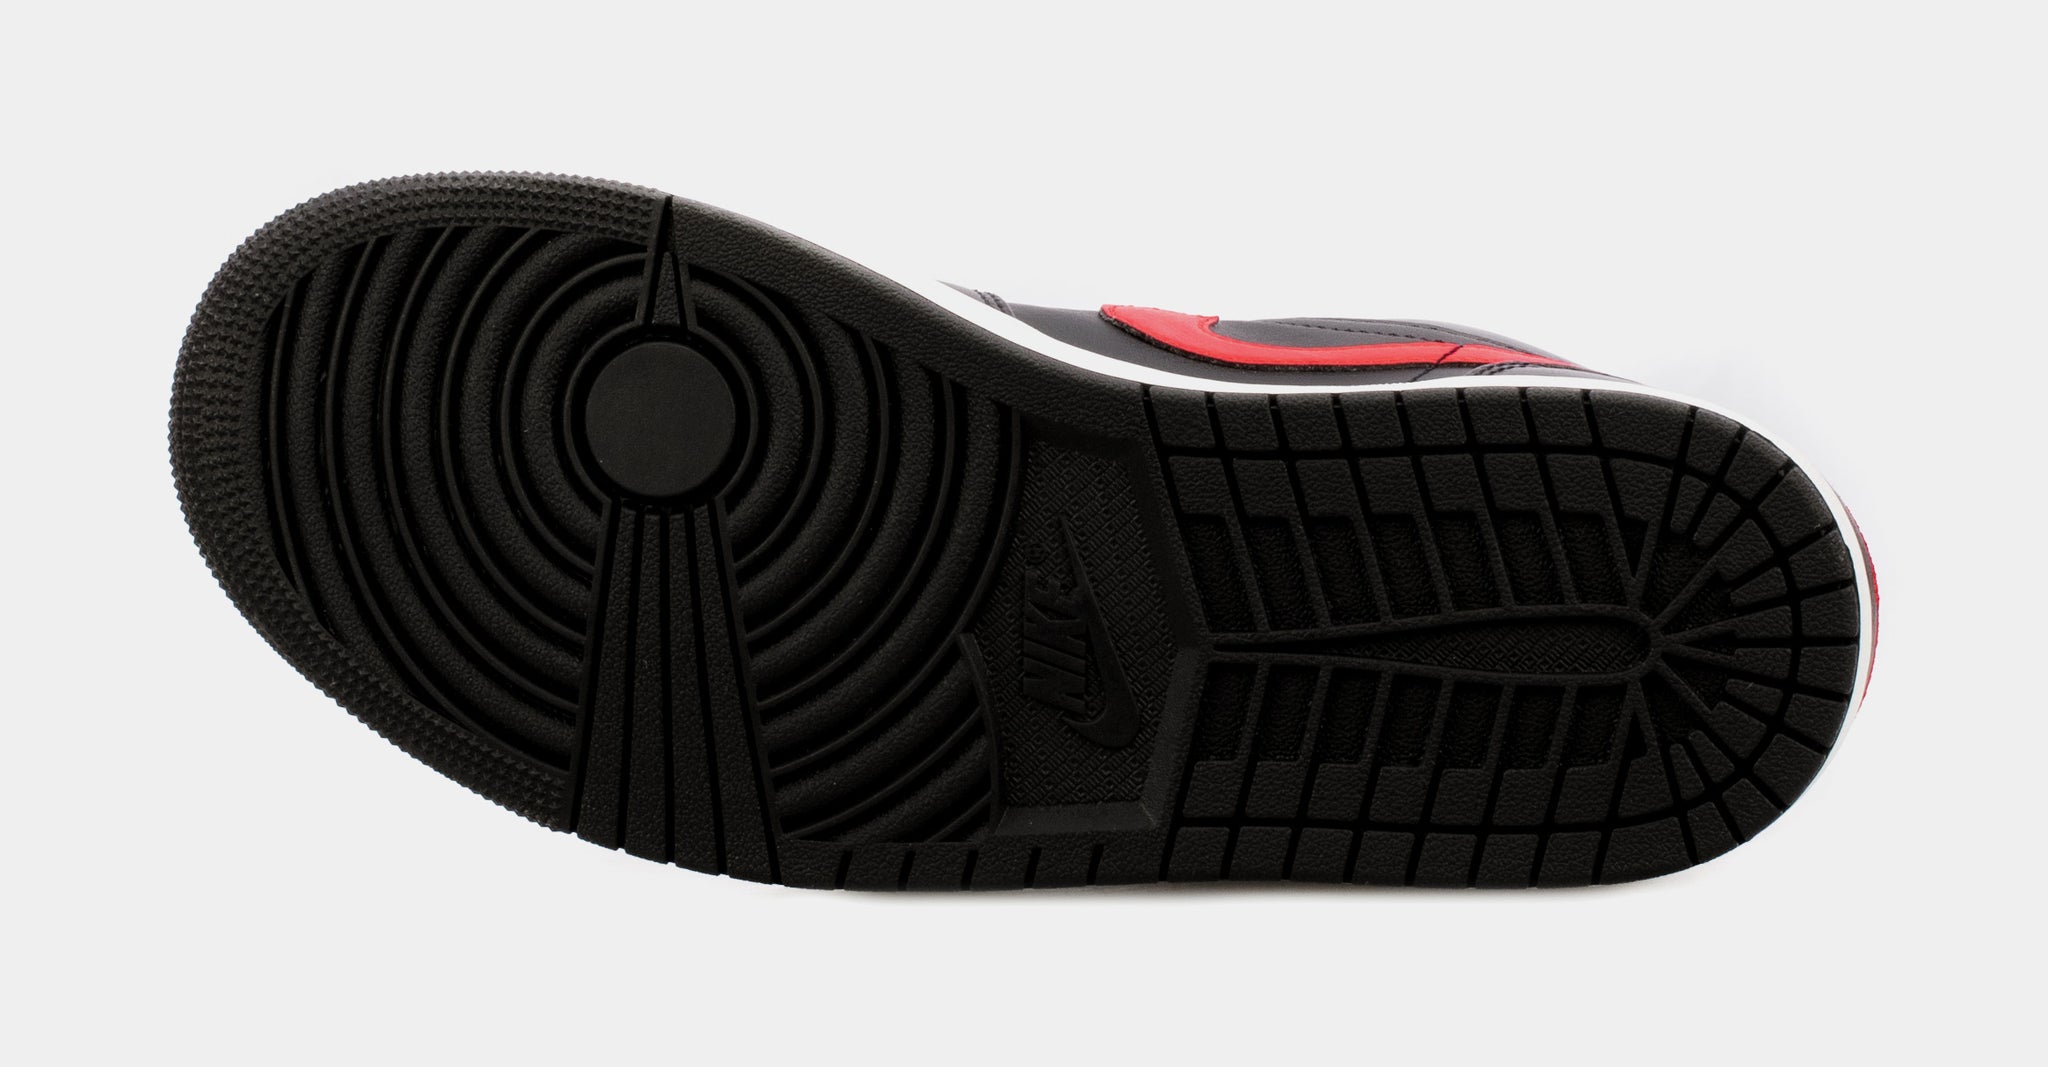 Air Jordan 1 Low White Toe Mens Lifestyle Shoes (Black/Red) Free shipping